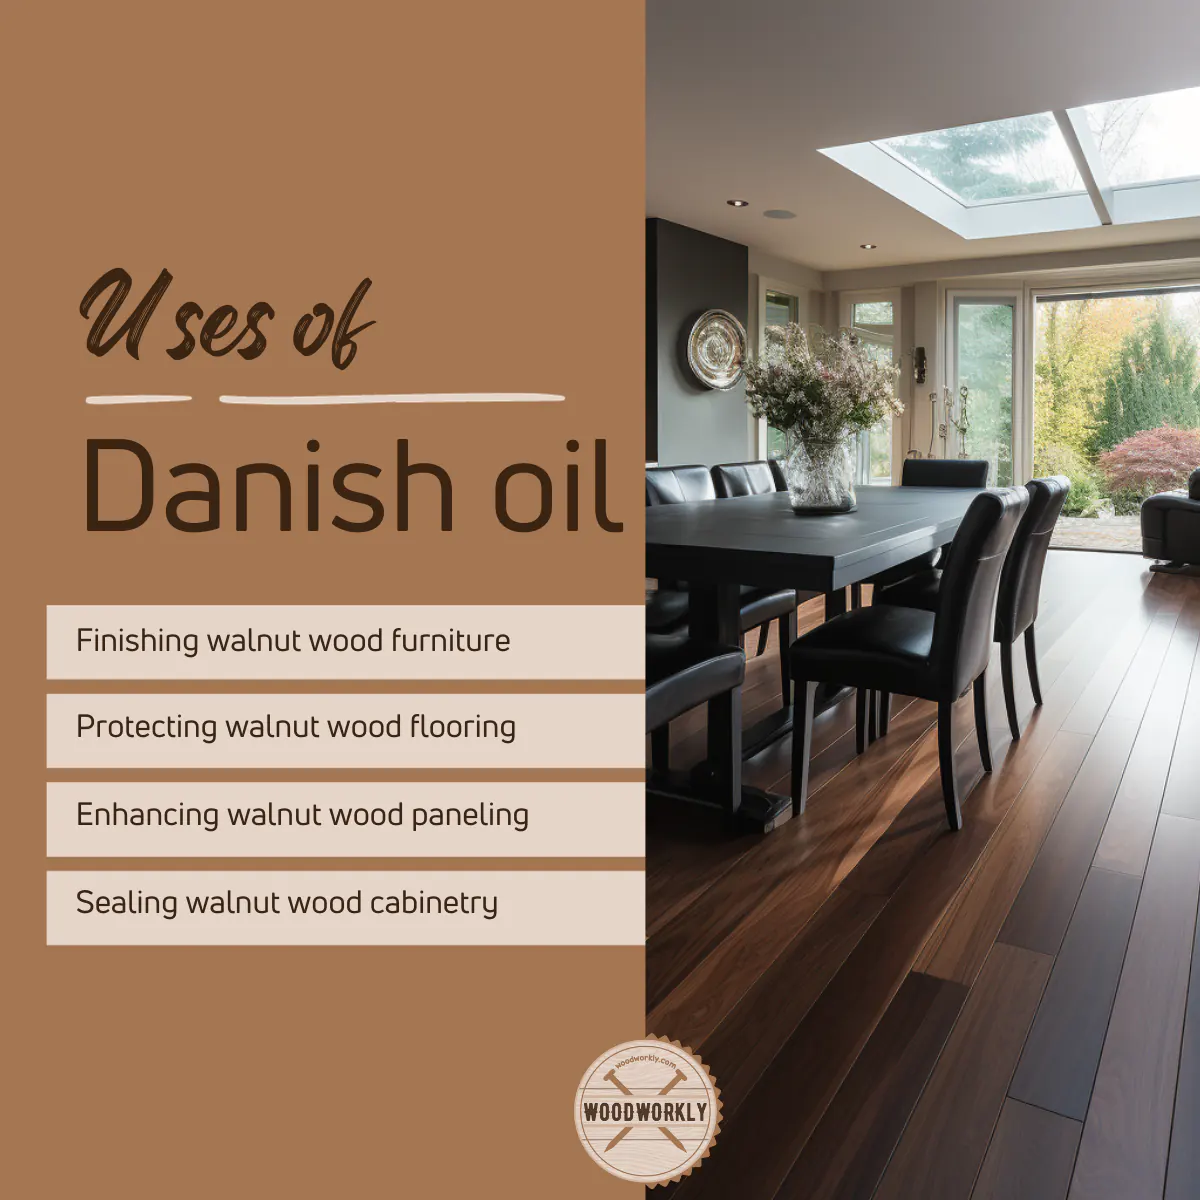 Uses of Danish oil on walnut